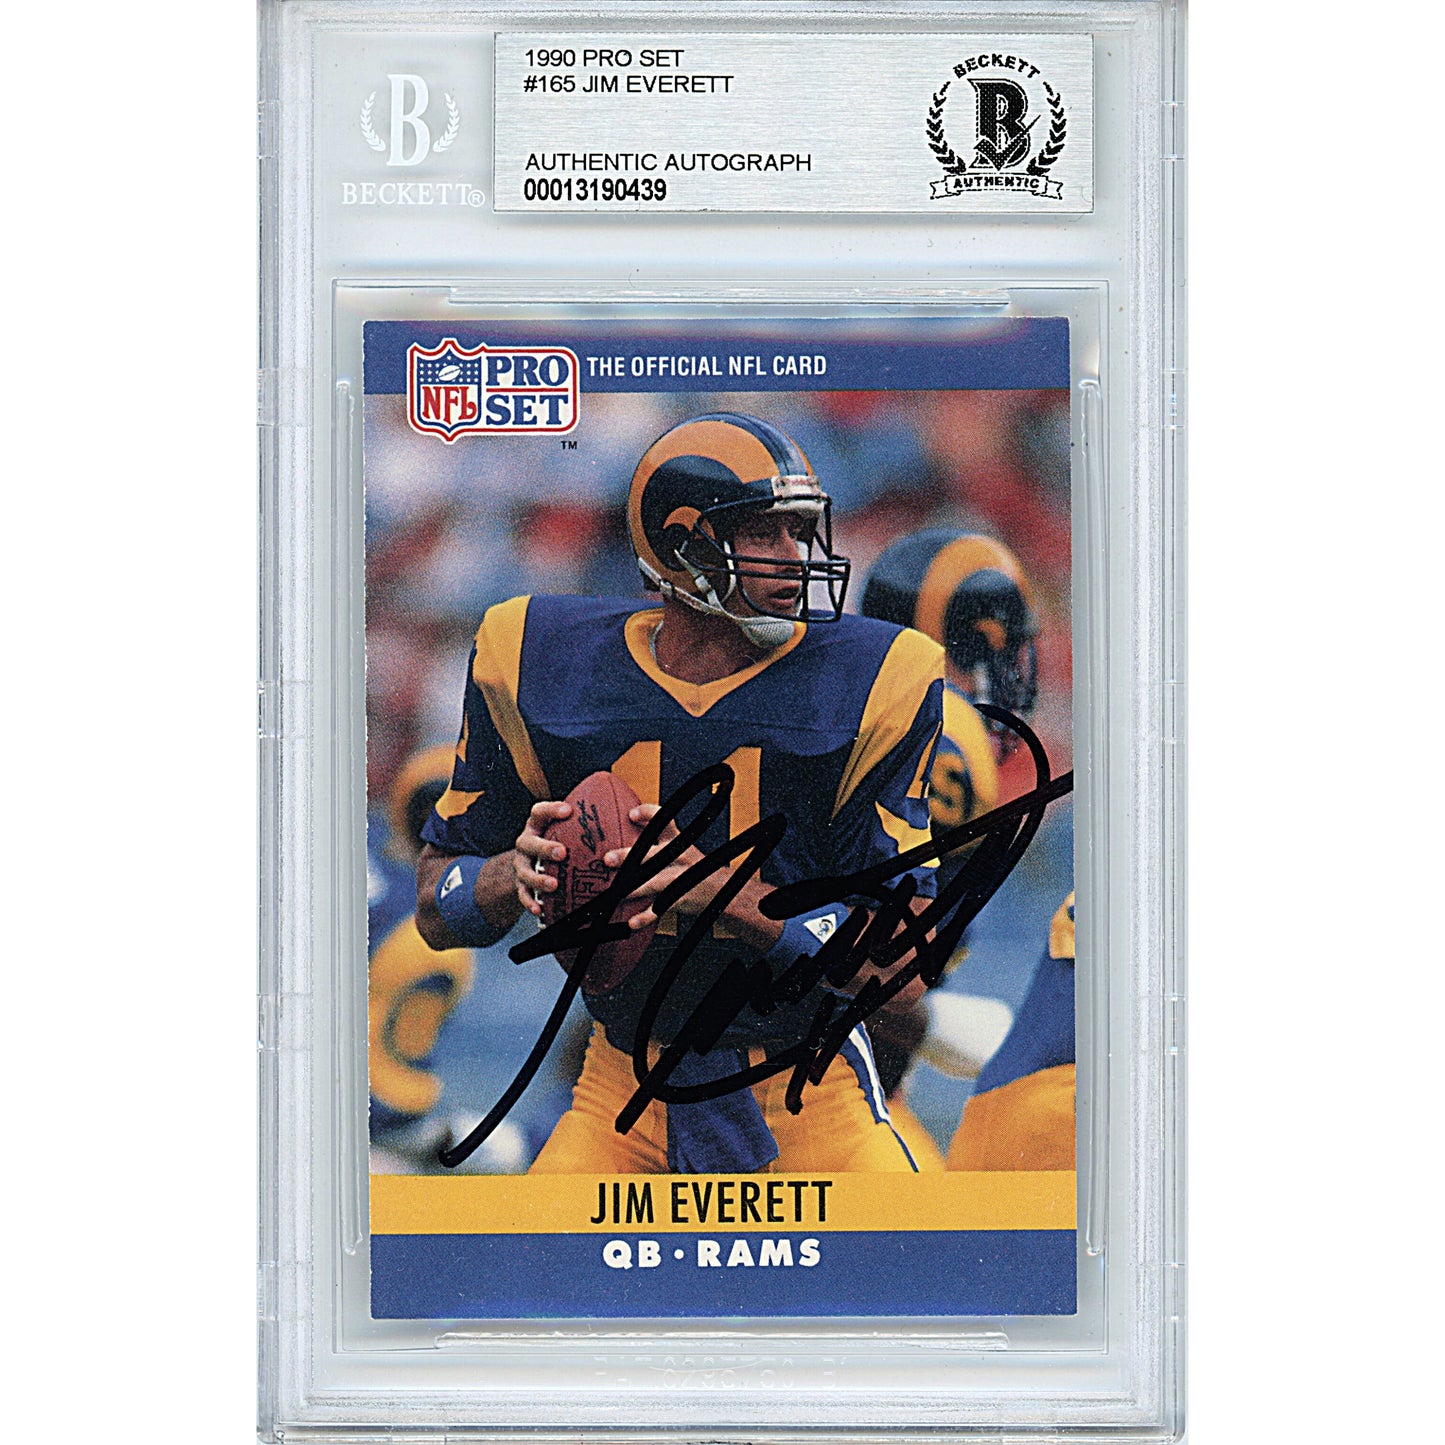 Footballs- Autographed- Jim Everett Signed Los Angeles Rams 1990 NFL Pro Set Football Card Beckett BAS Authenticated Slabbed 00013190439 - 101